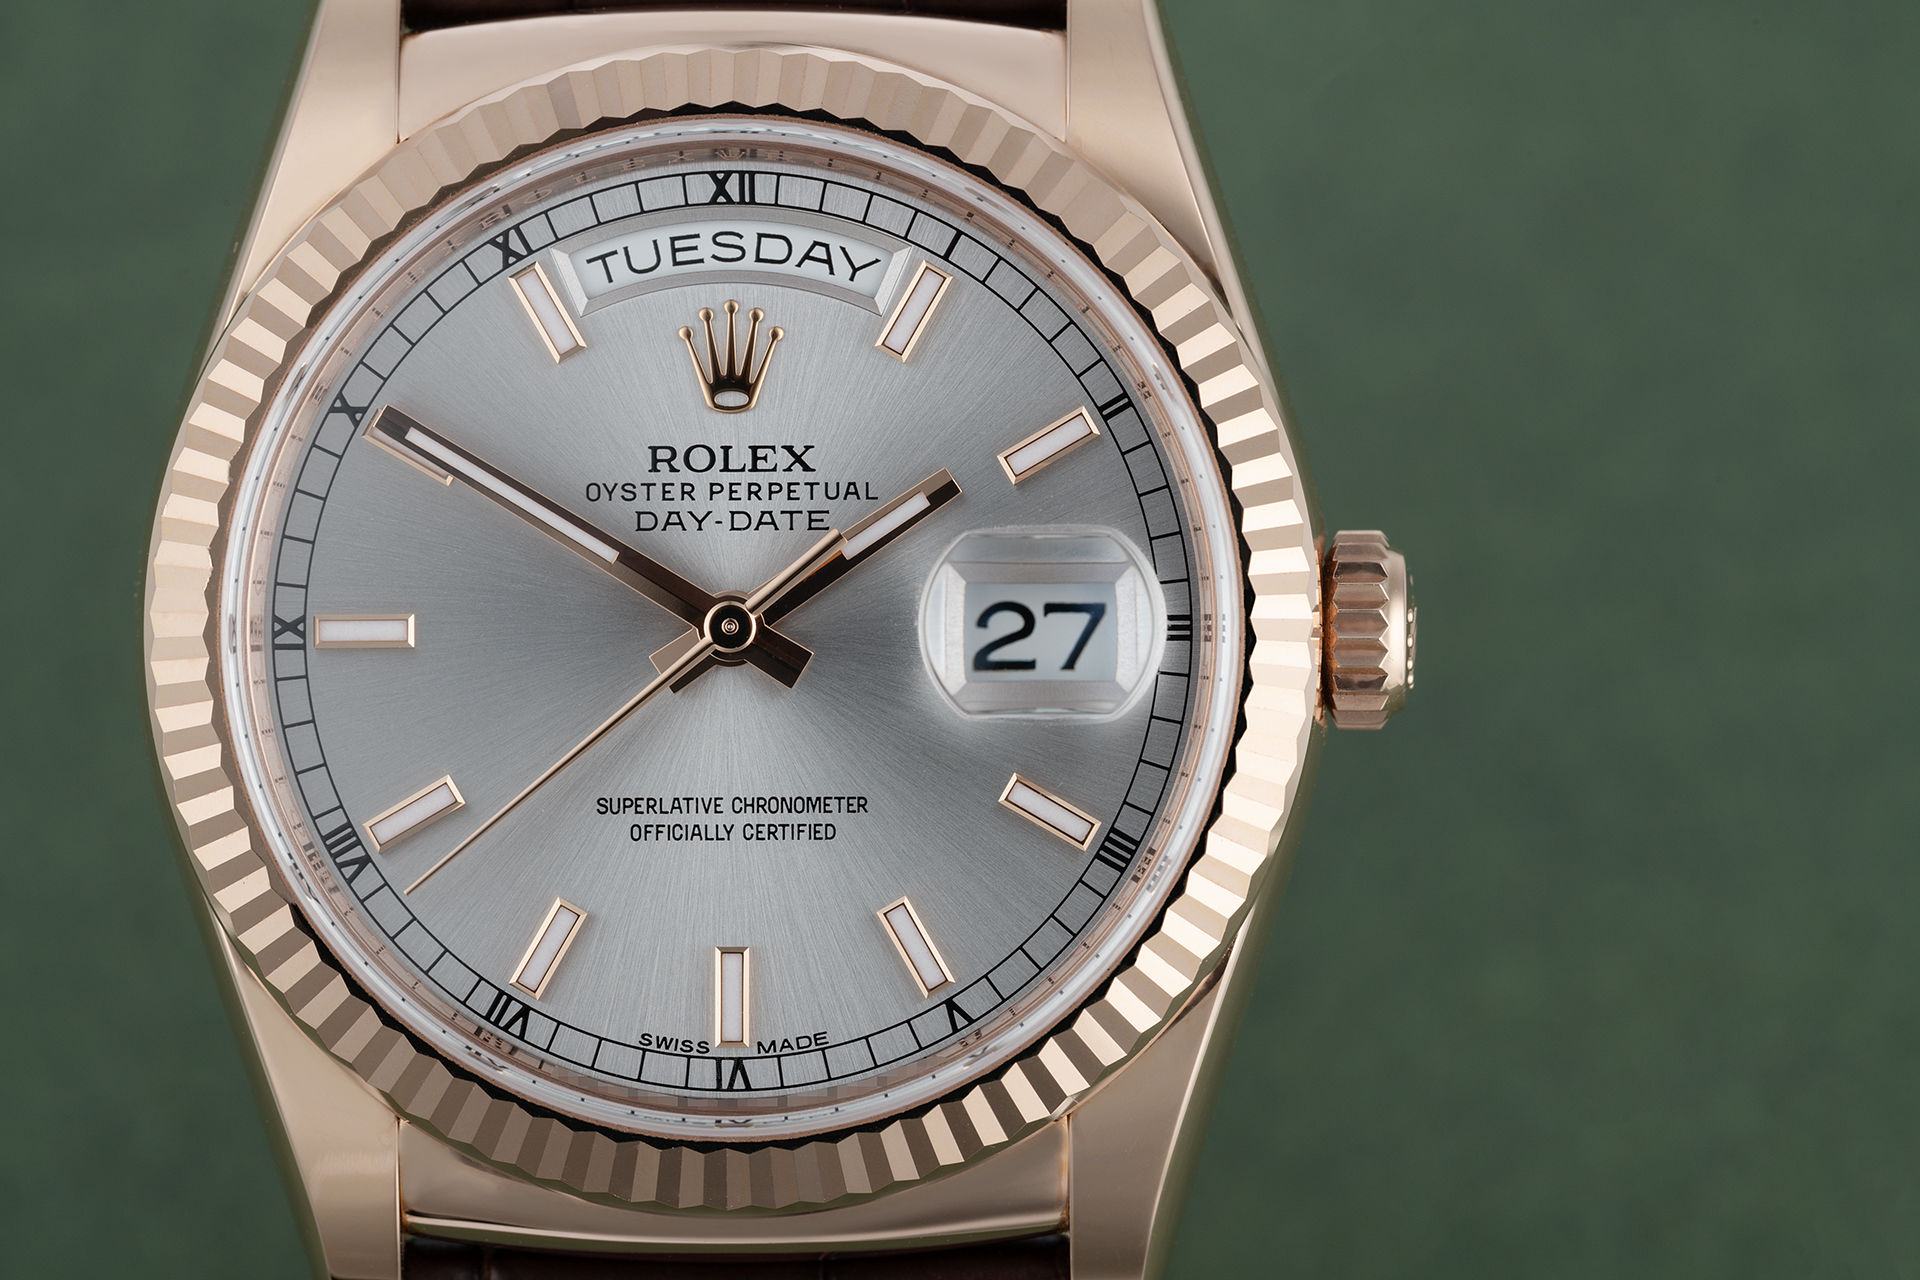 ref 118135 | 'New' 5 Year Warranty | Rolex Day-Date